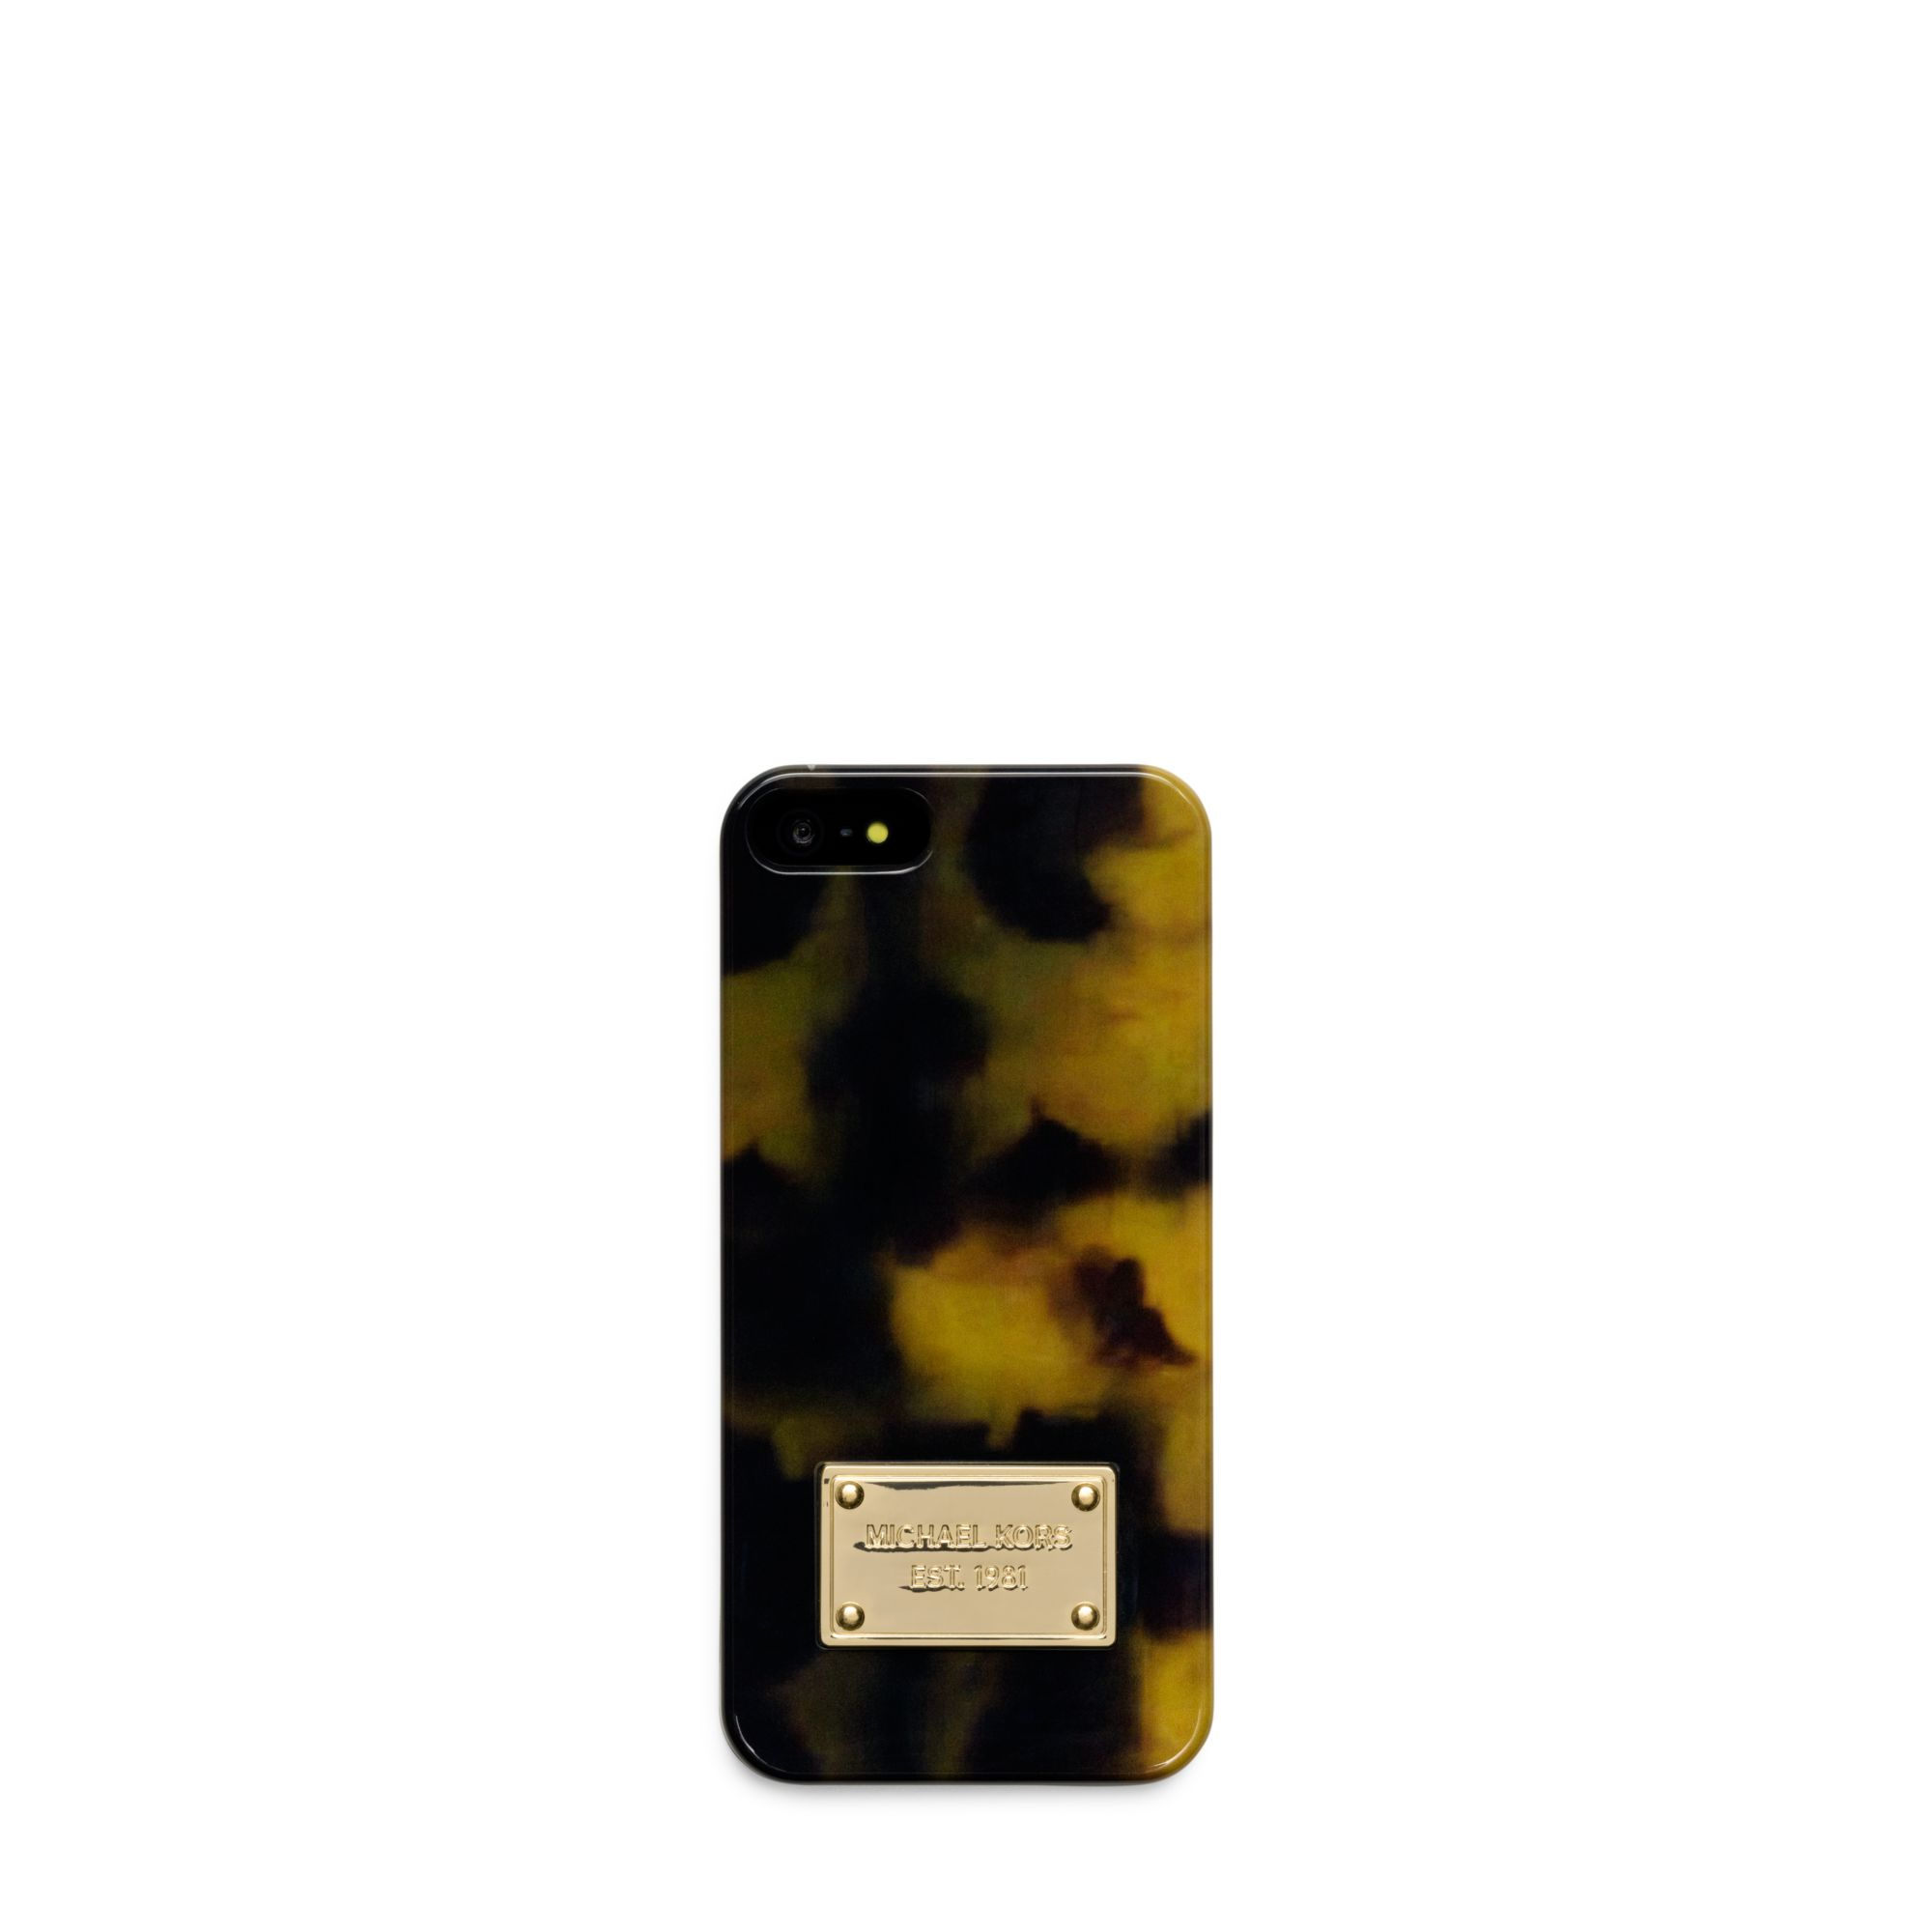 michael kors iphone 5s case